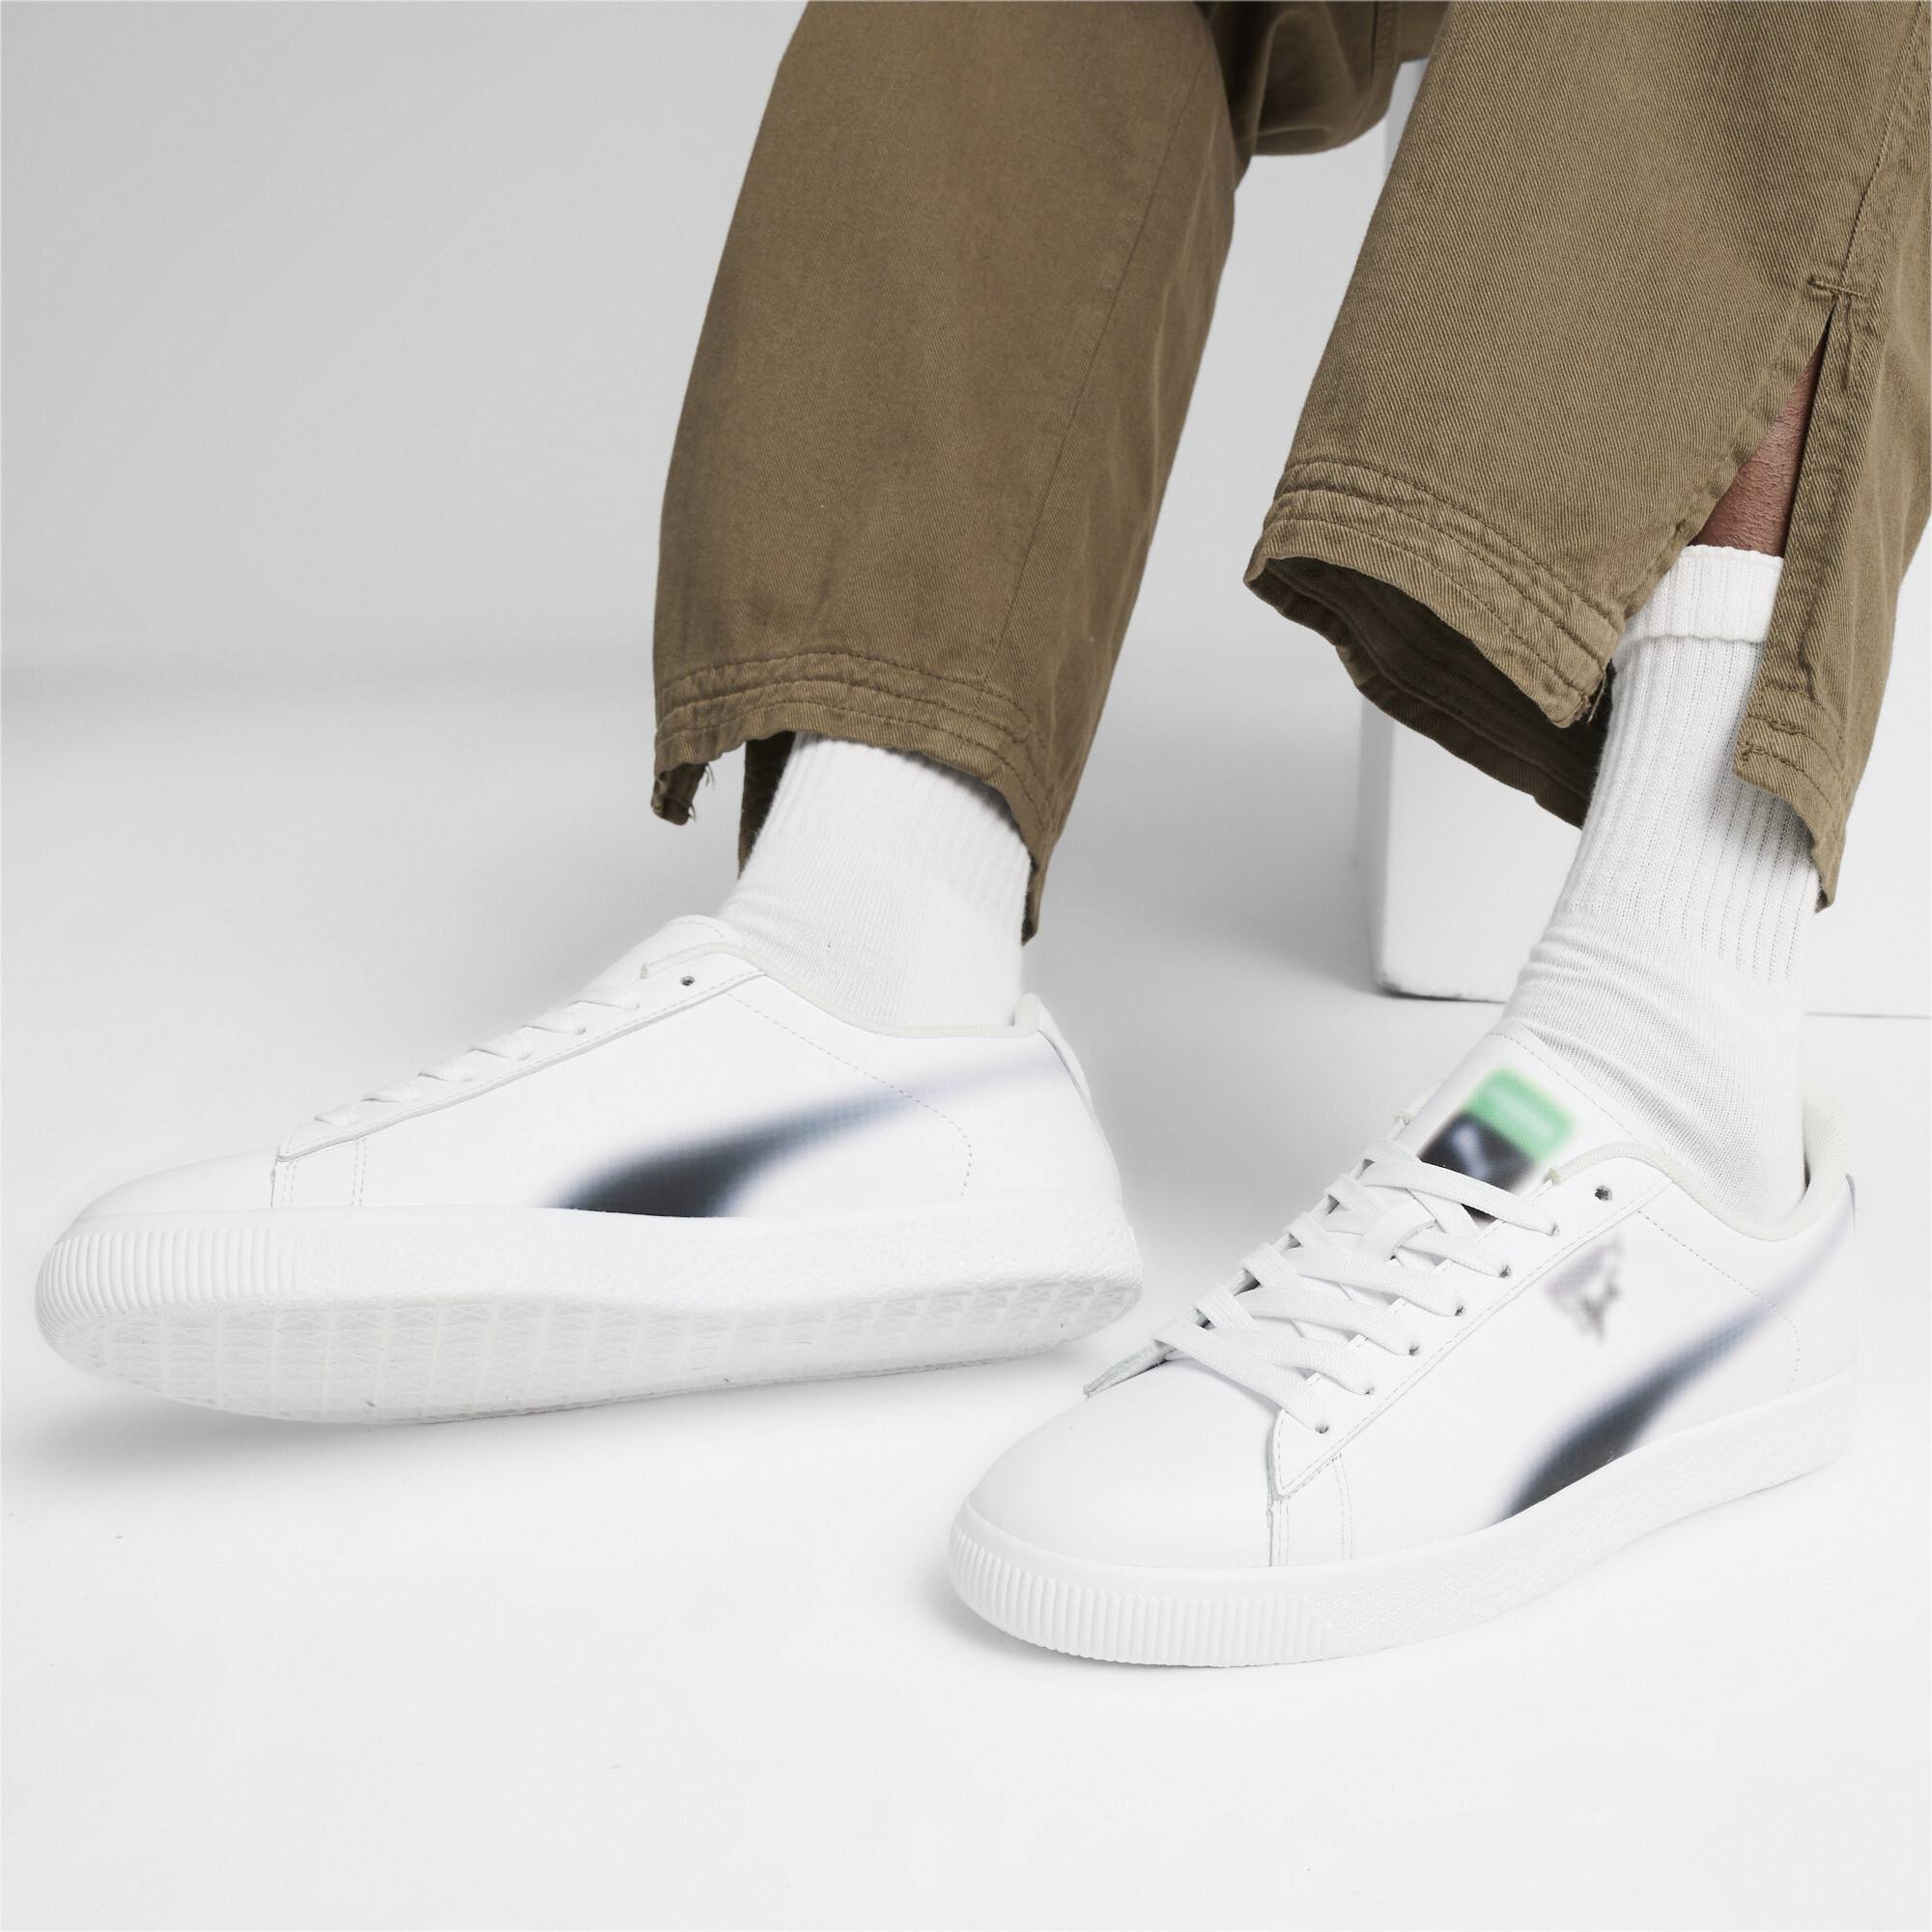 Puma Clyde SKRT SKRT Sneakers, White, Size 38.5, Shoes